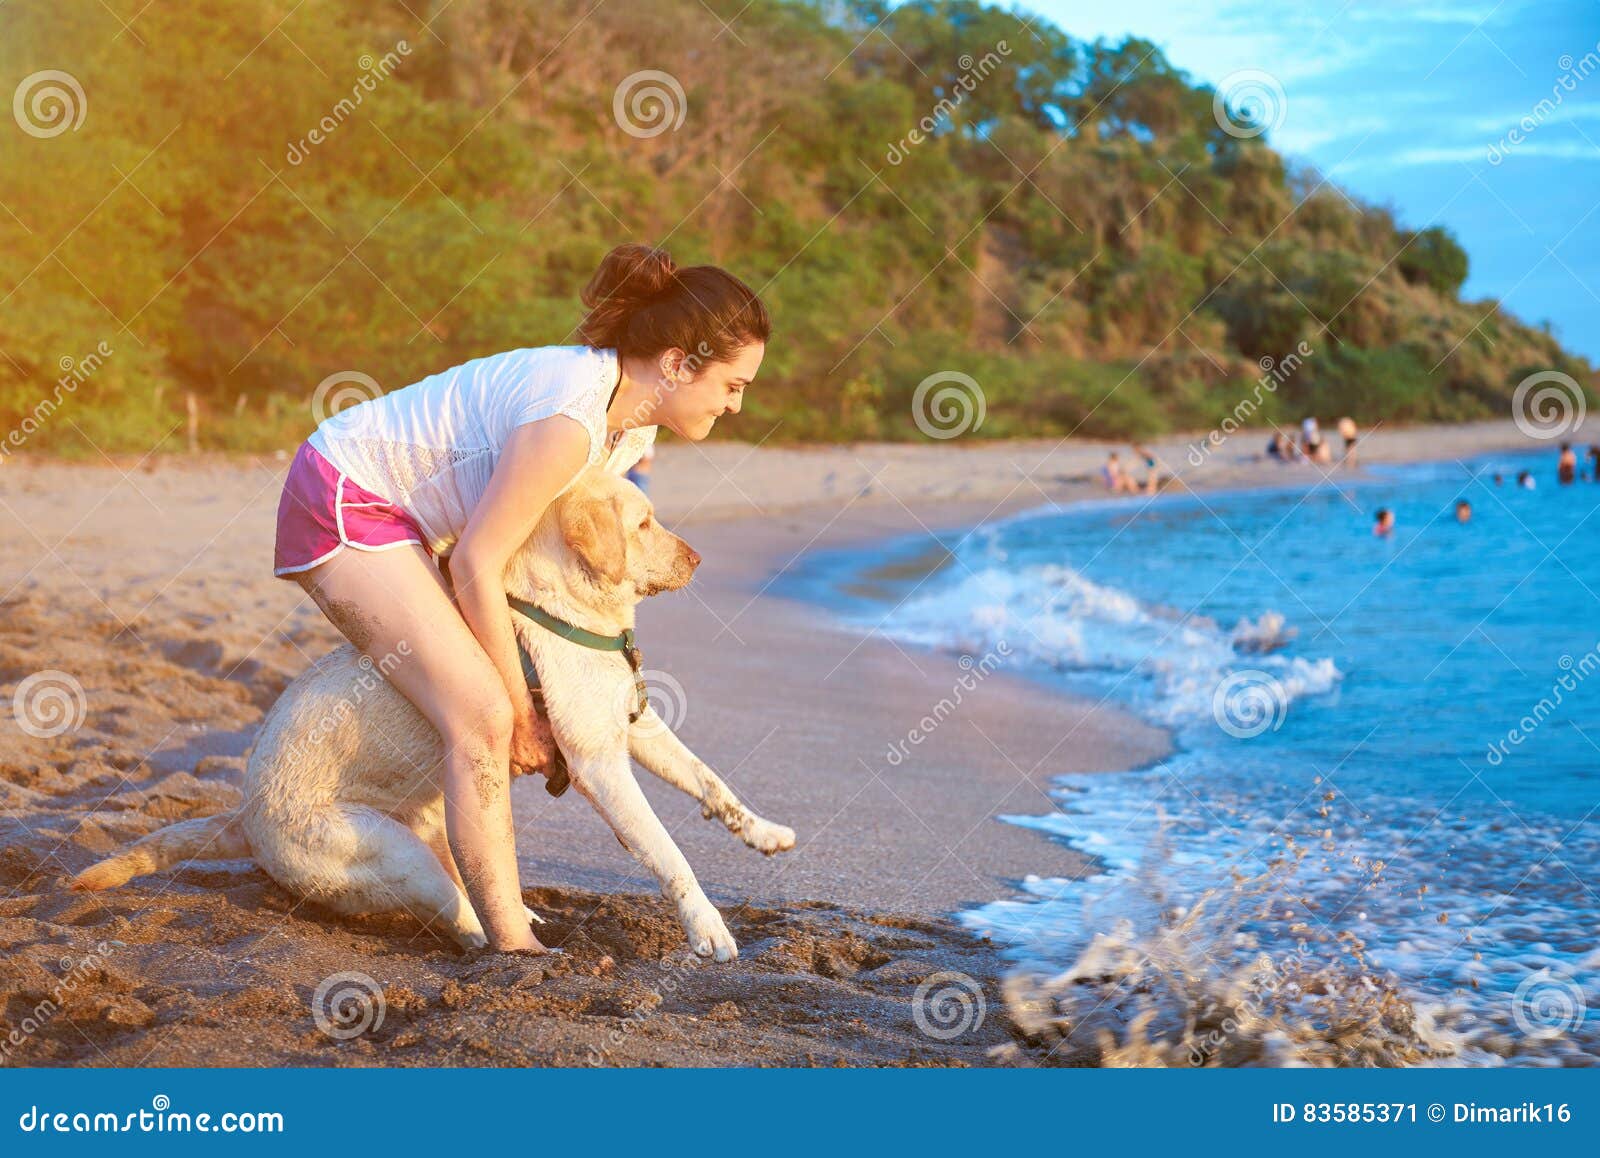 labrador dog afraid of swimming